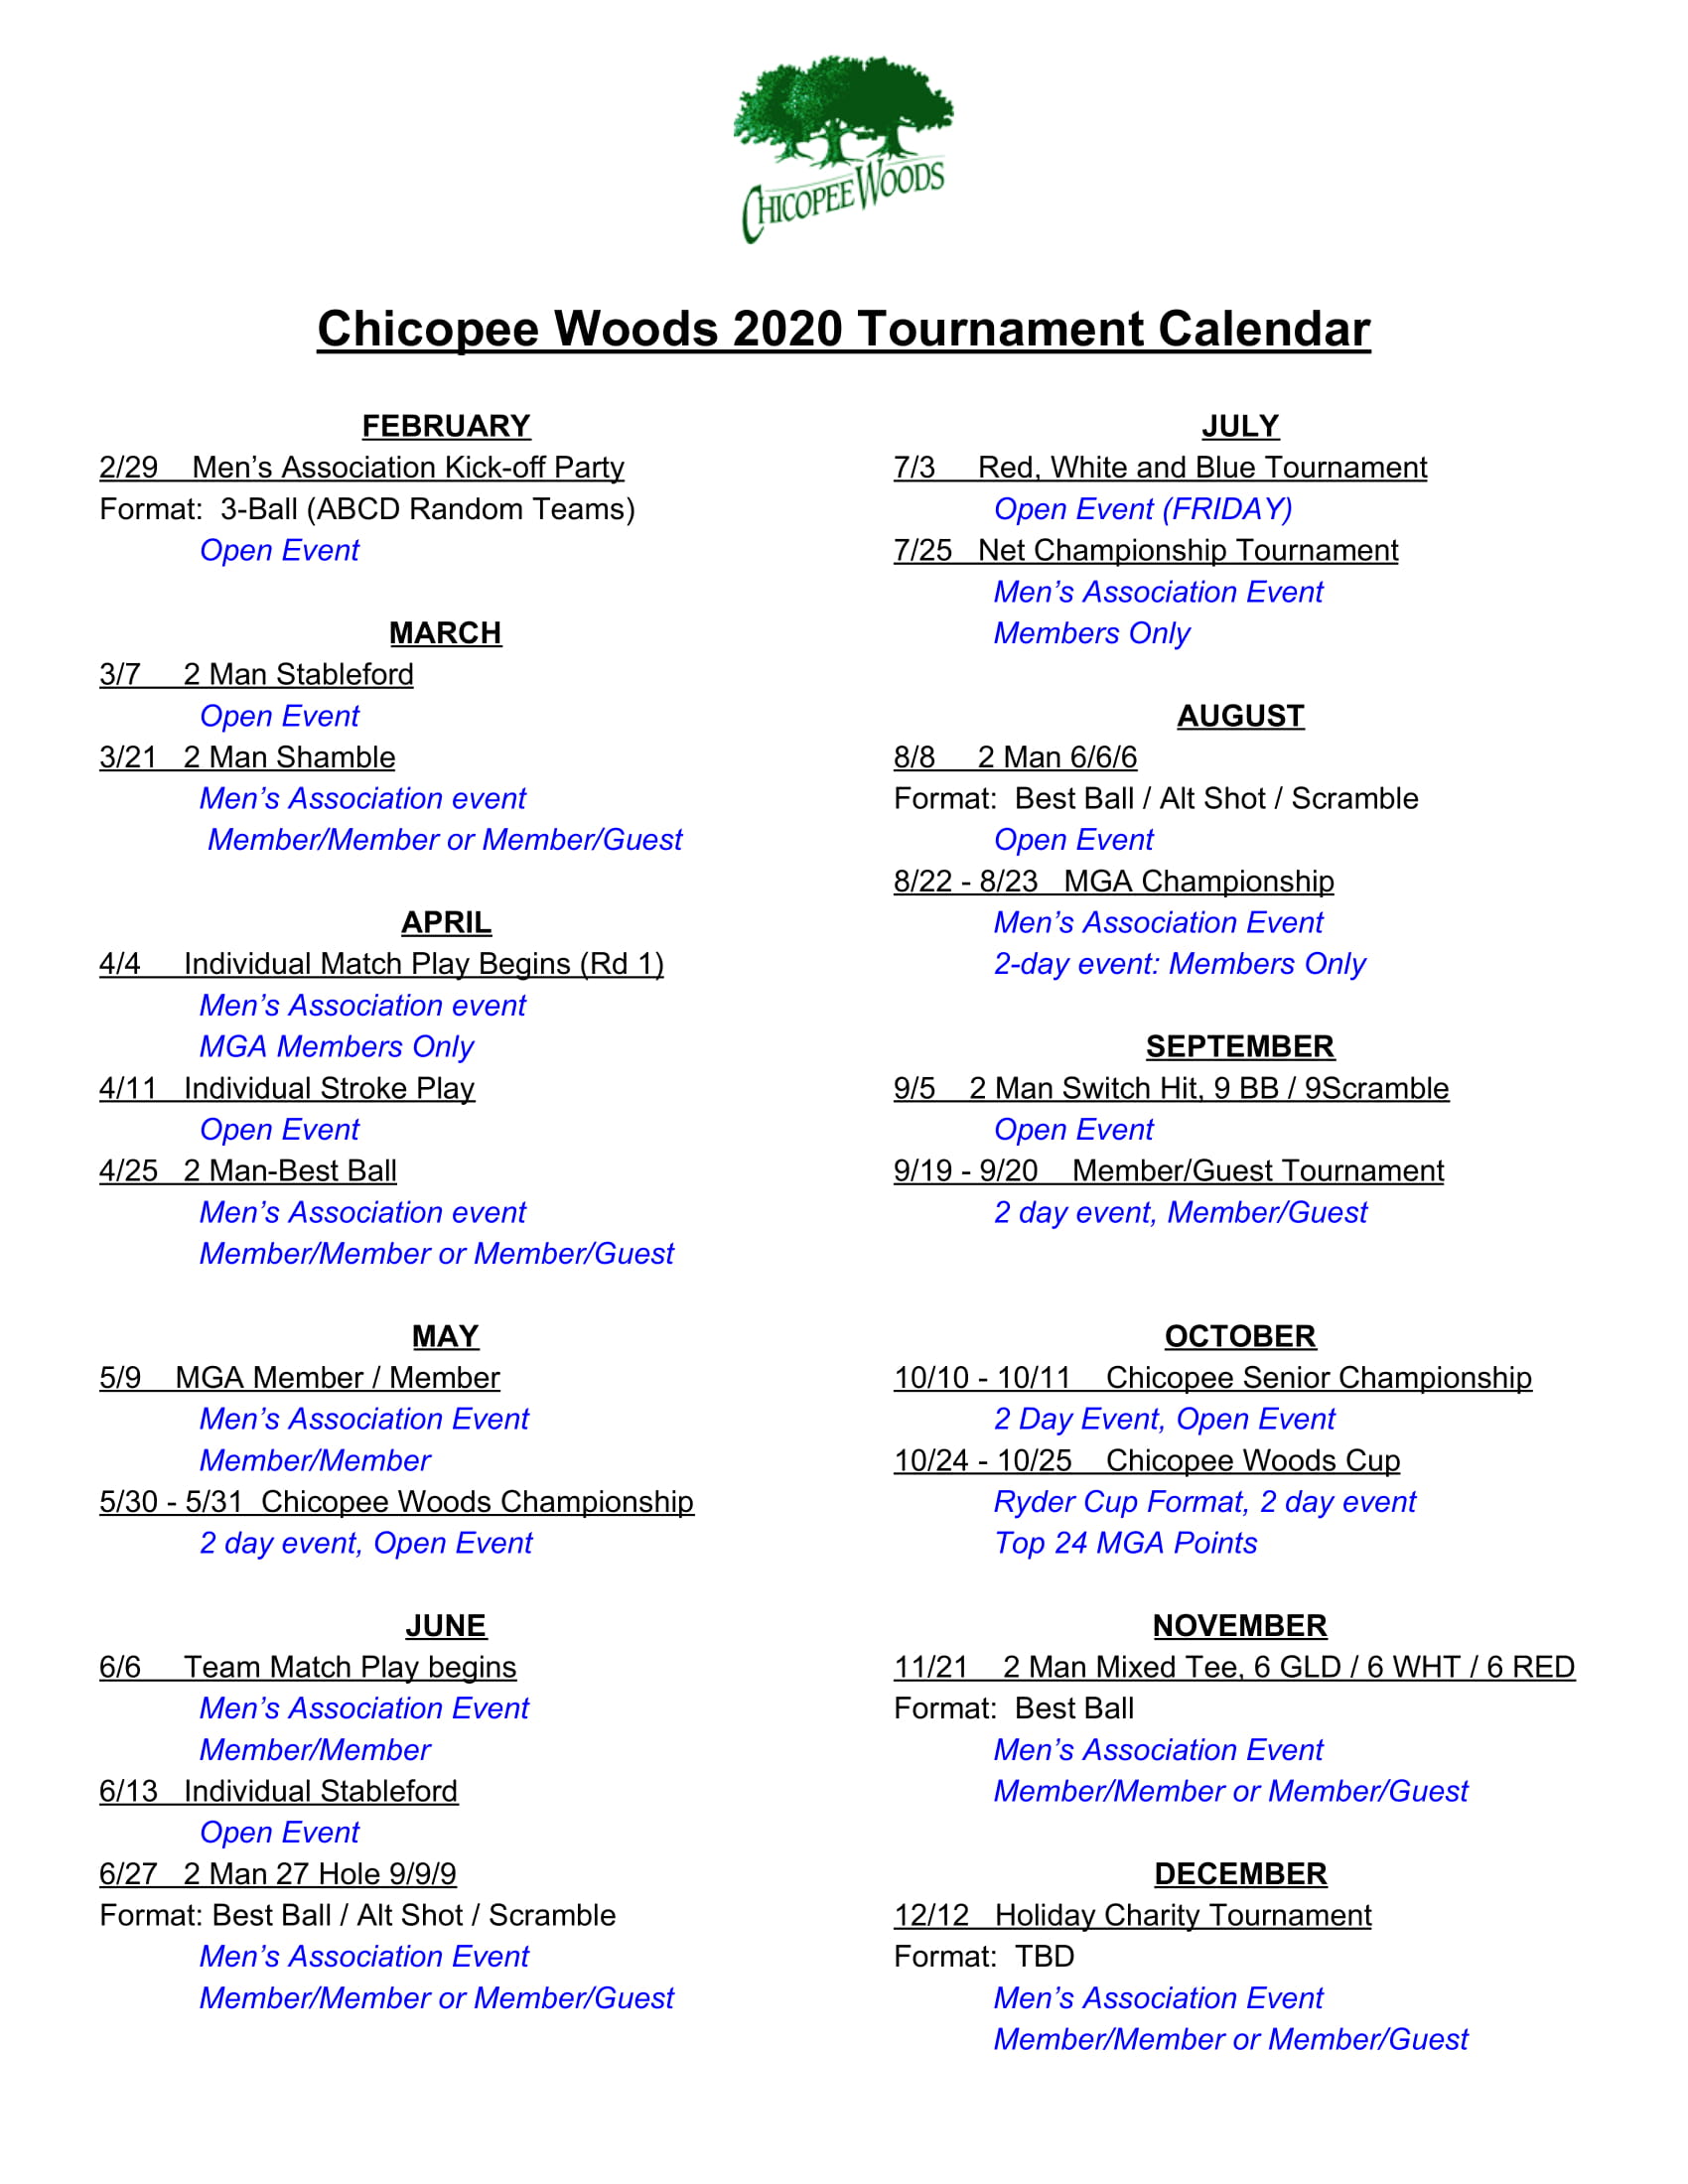 Tournament Calendar 2020 Chicopee Woods Golf Course